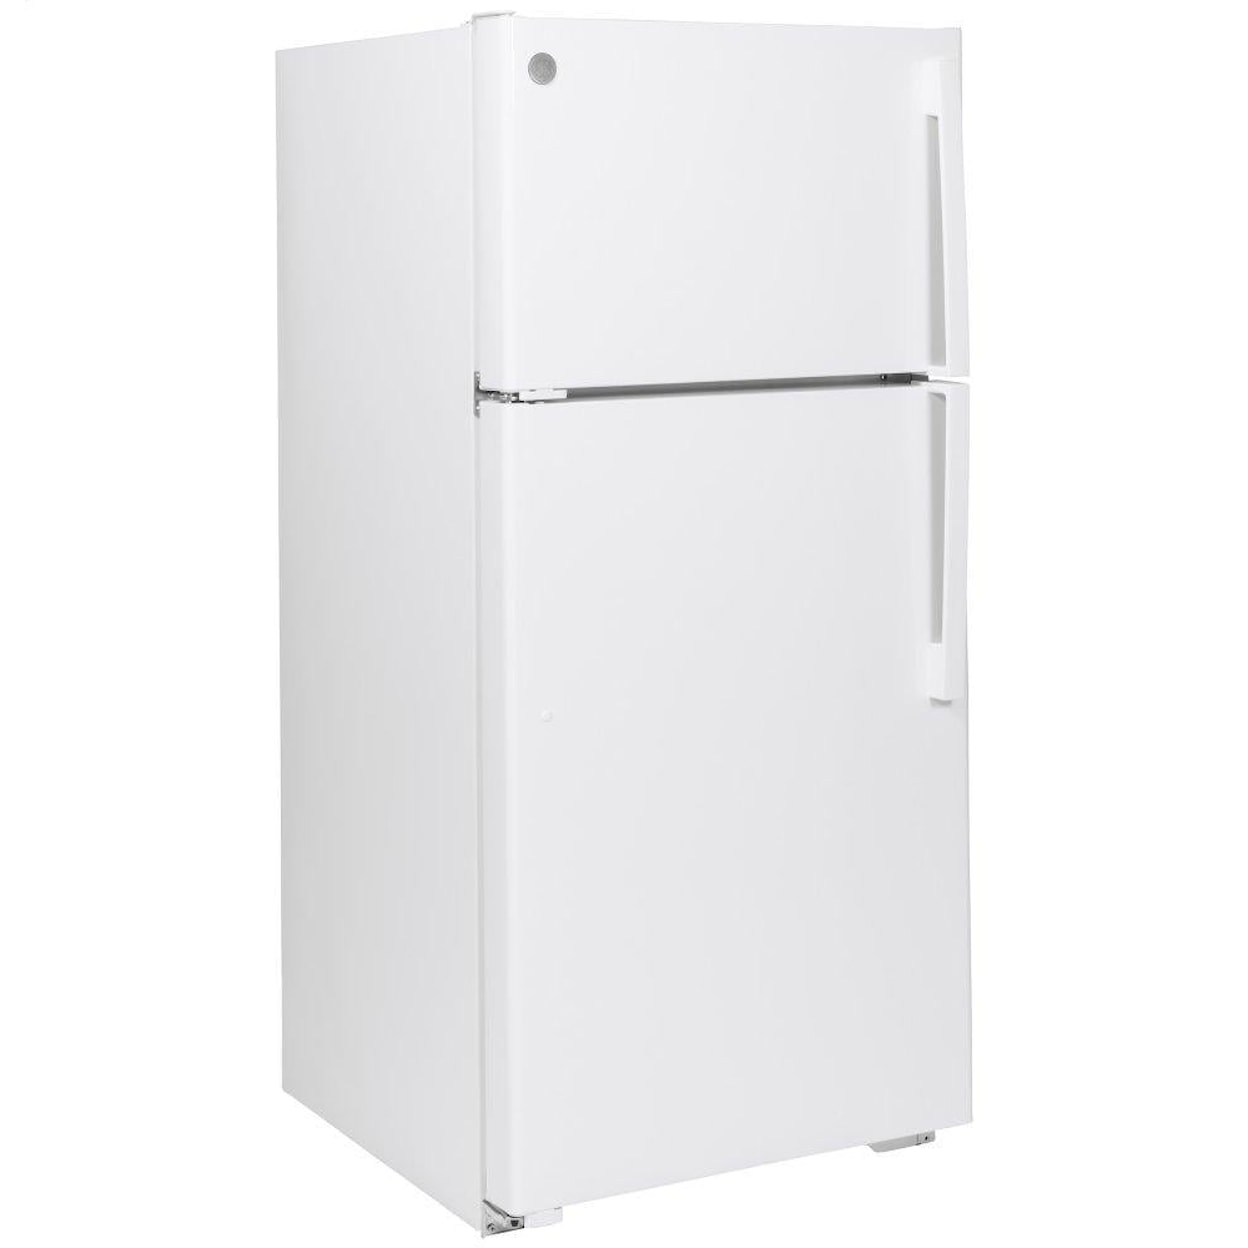 GE Appliances Refrigerators REFRIGERATOR